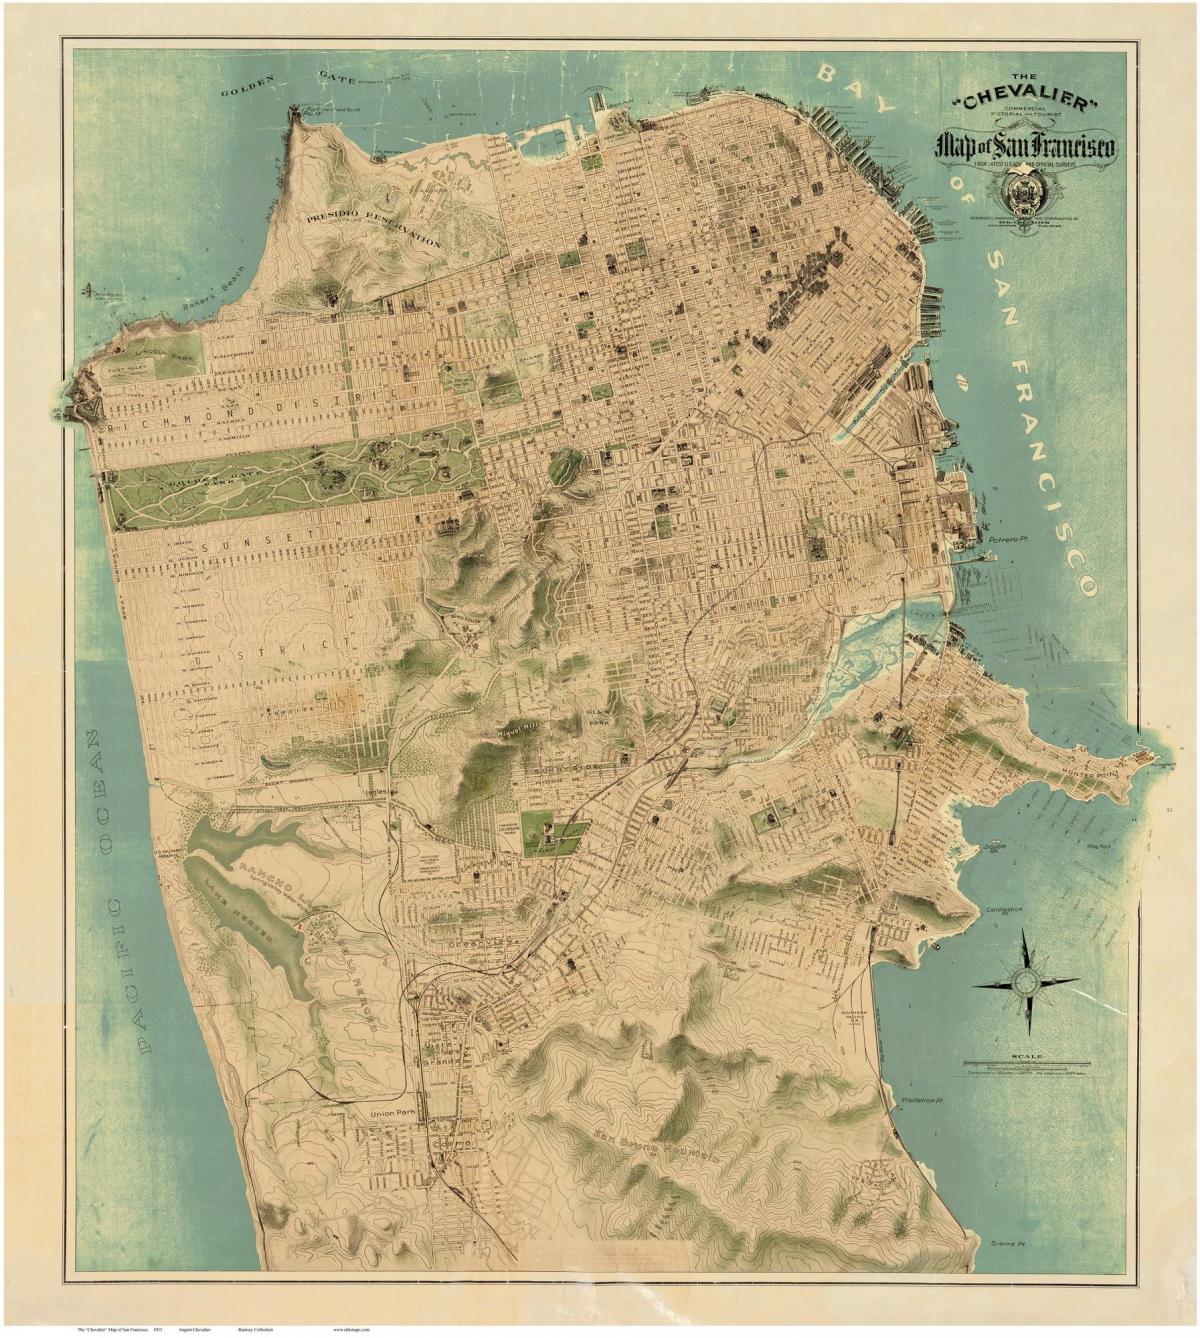 Kart over gamle San Francisco 